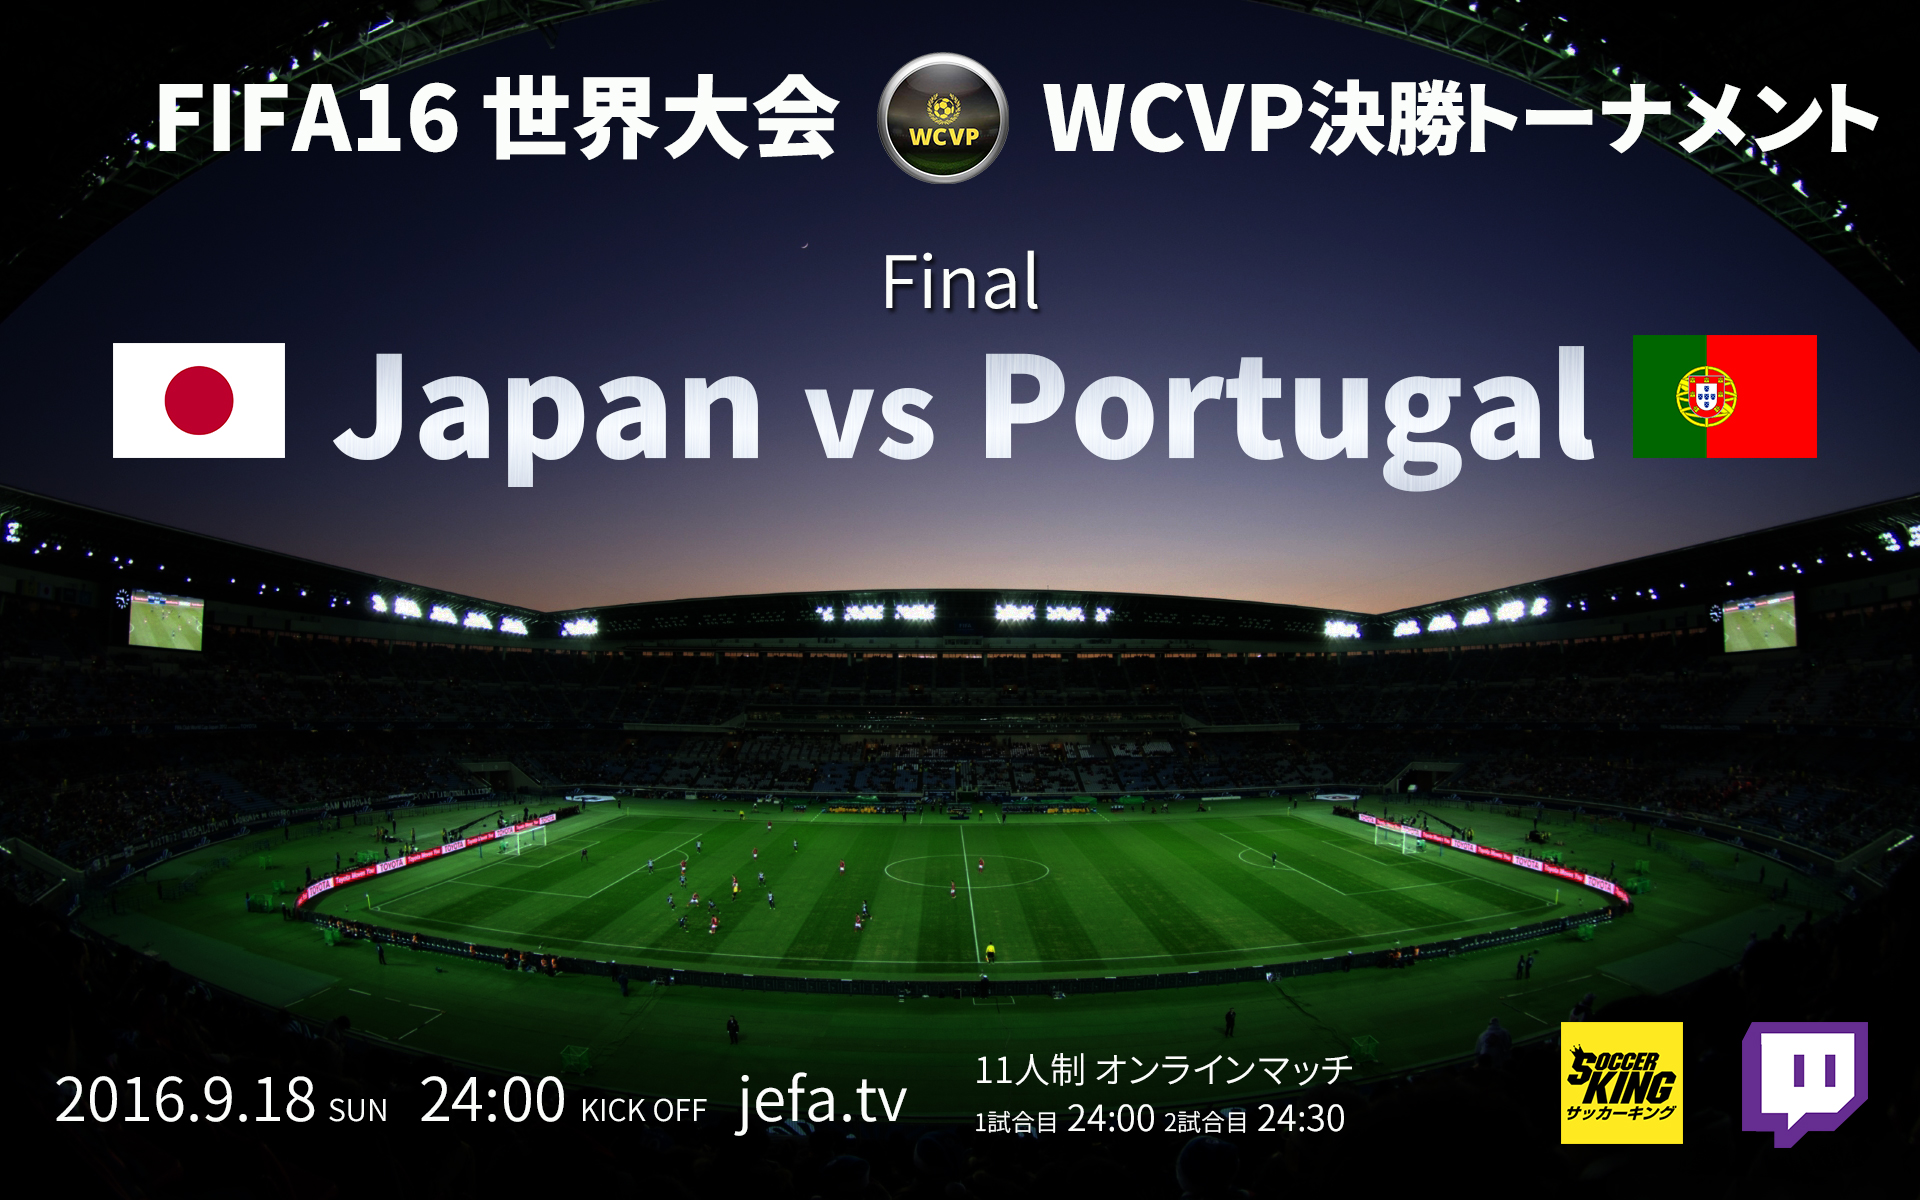 Jefa日本代表 今夜運命の決勝戦 相手は欧州の強豪国ポルトガル Fifa16 世界大会wcvp決勝戦 サッカーキング